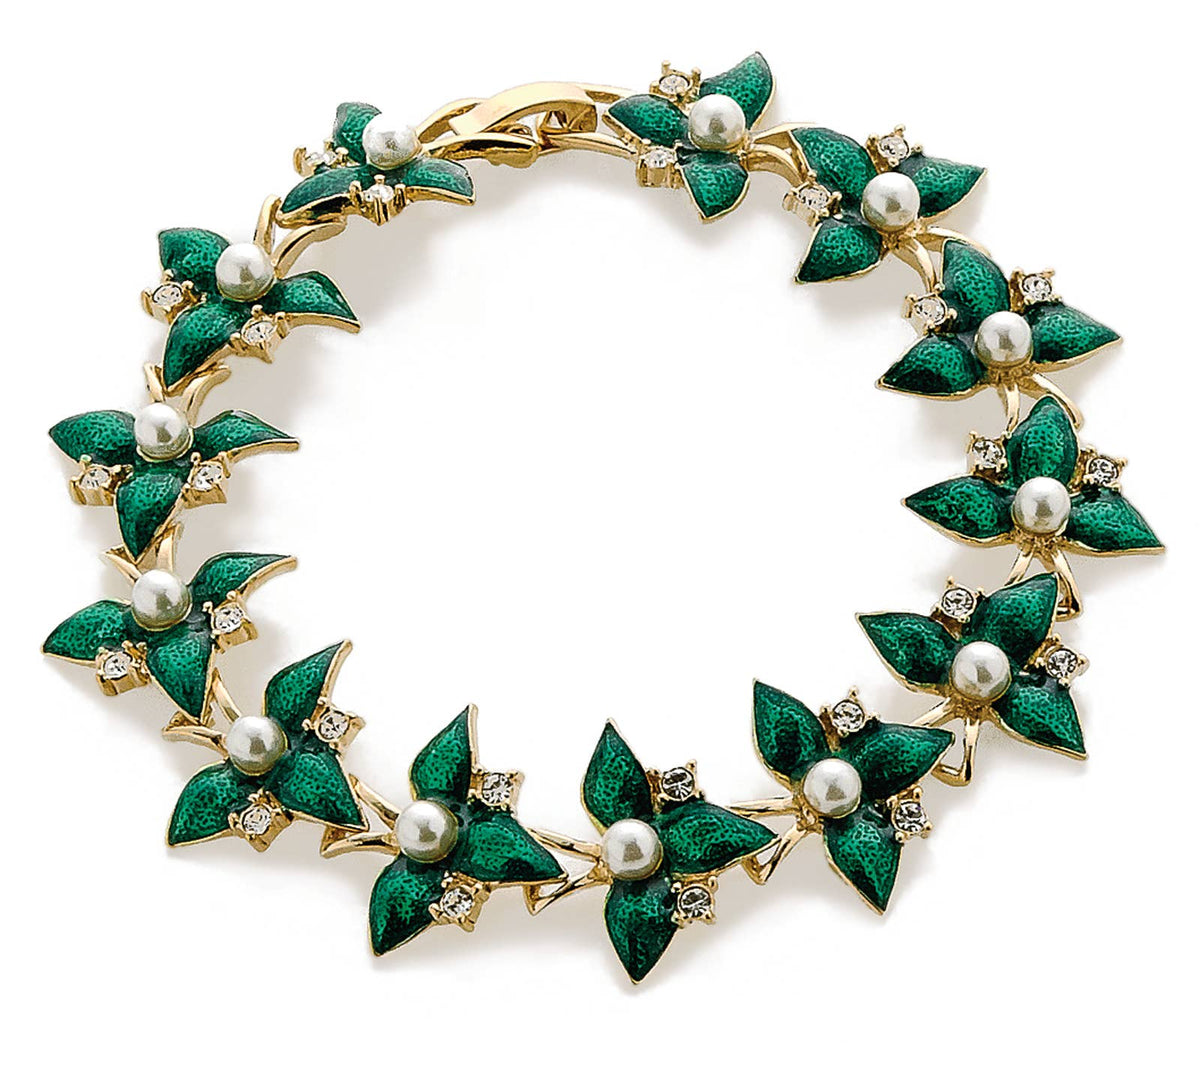 Emerald Flowers Bracelet - Not Every Libra